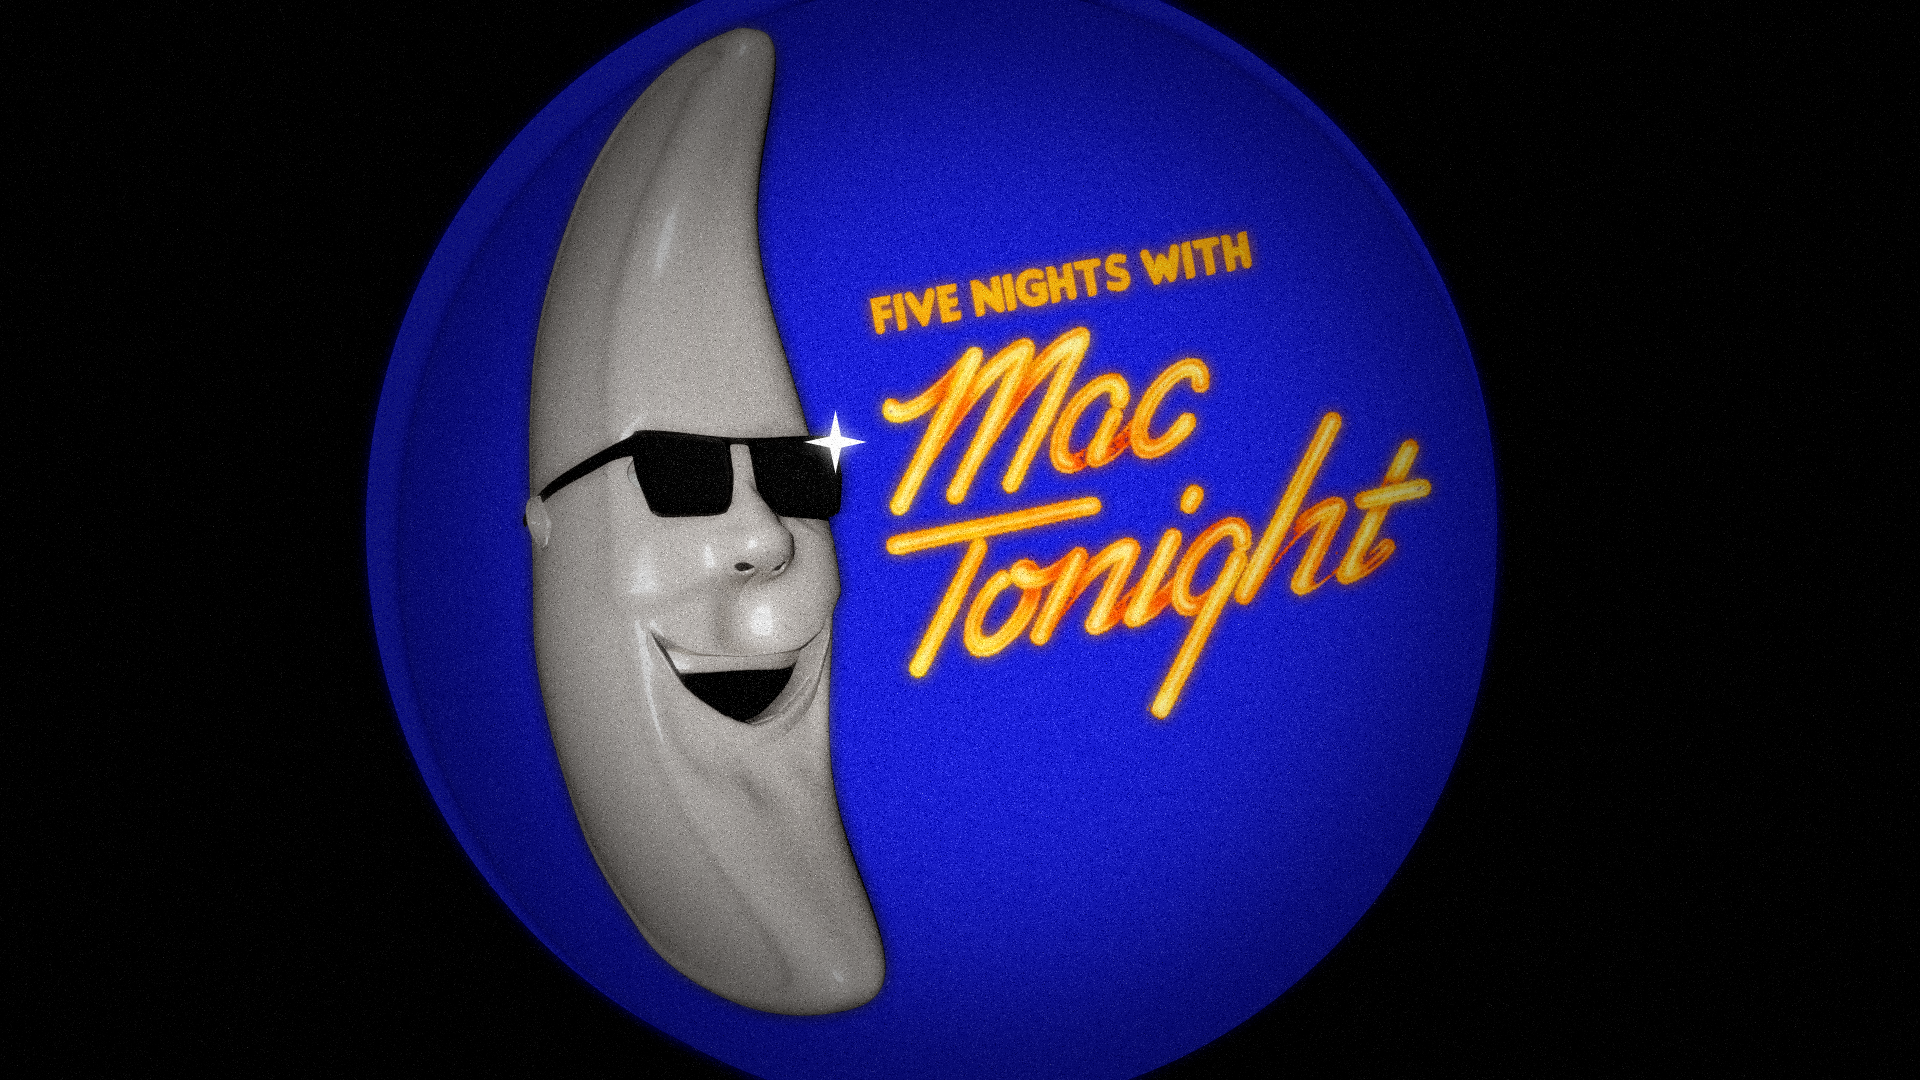 Five Nights With Mac Tonight. Five Nights with Mac Tonight